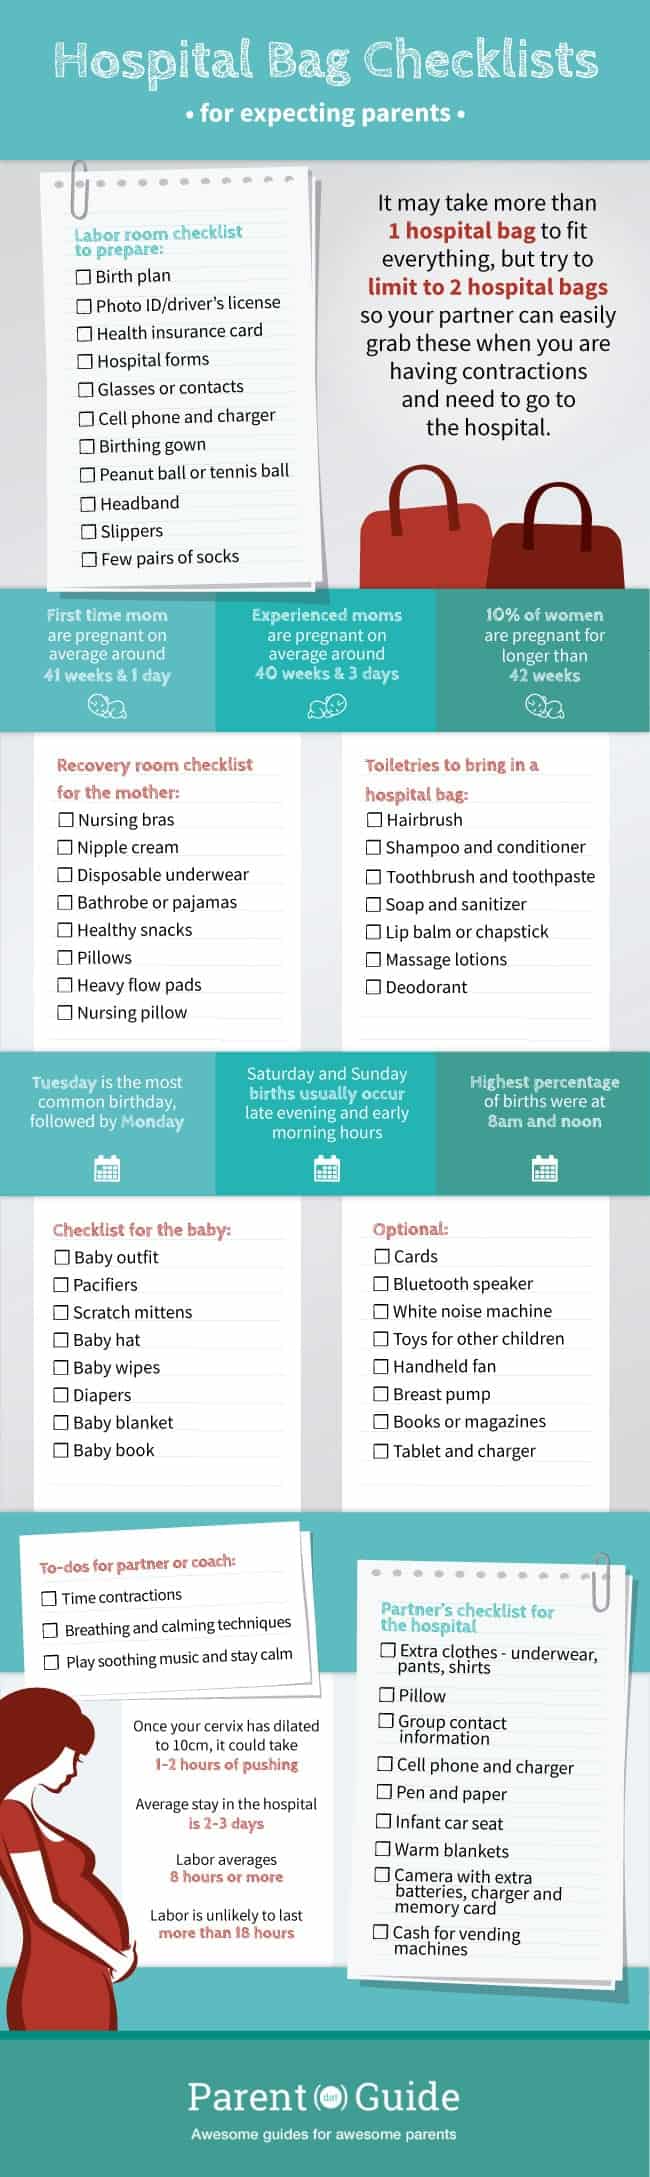 hospital bag checklist infographic